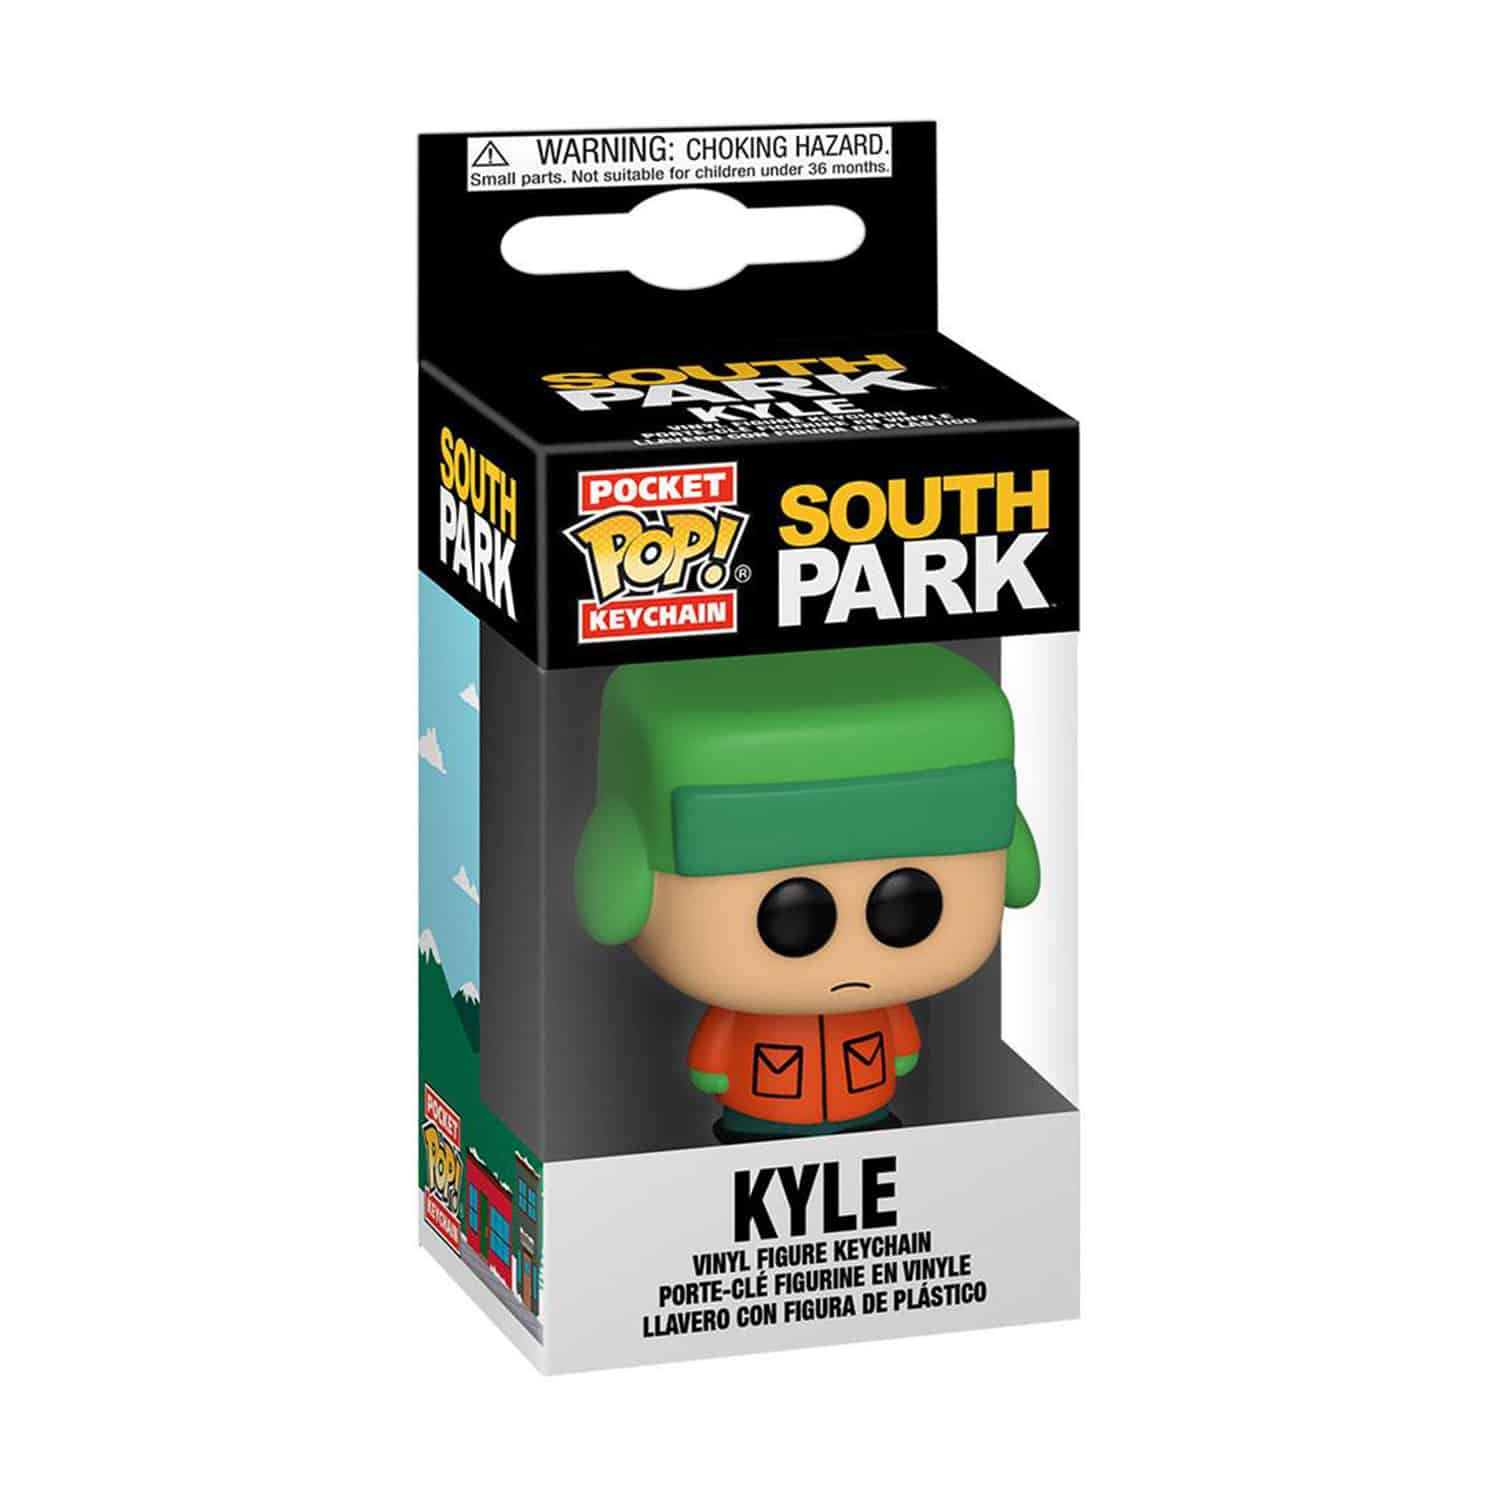 South Park - Kyle Pocket Pop! Vinyl Keychain